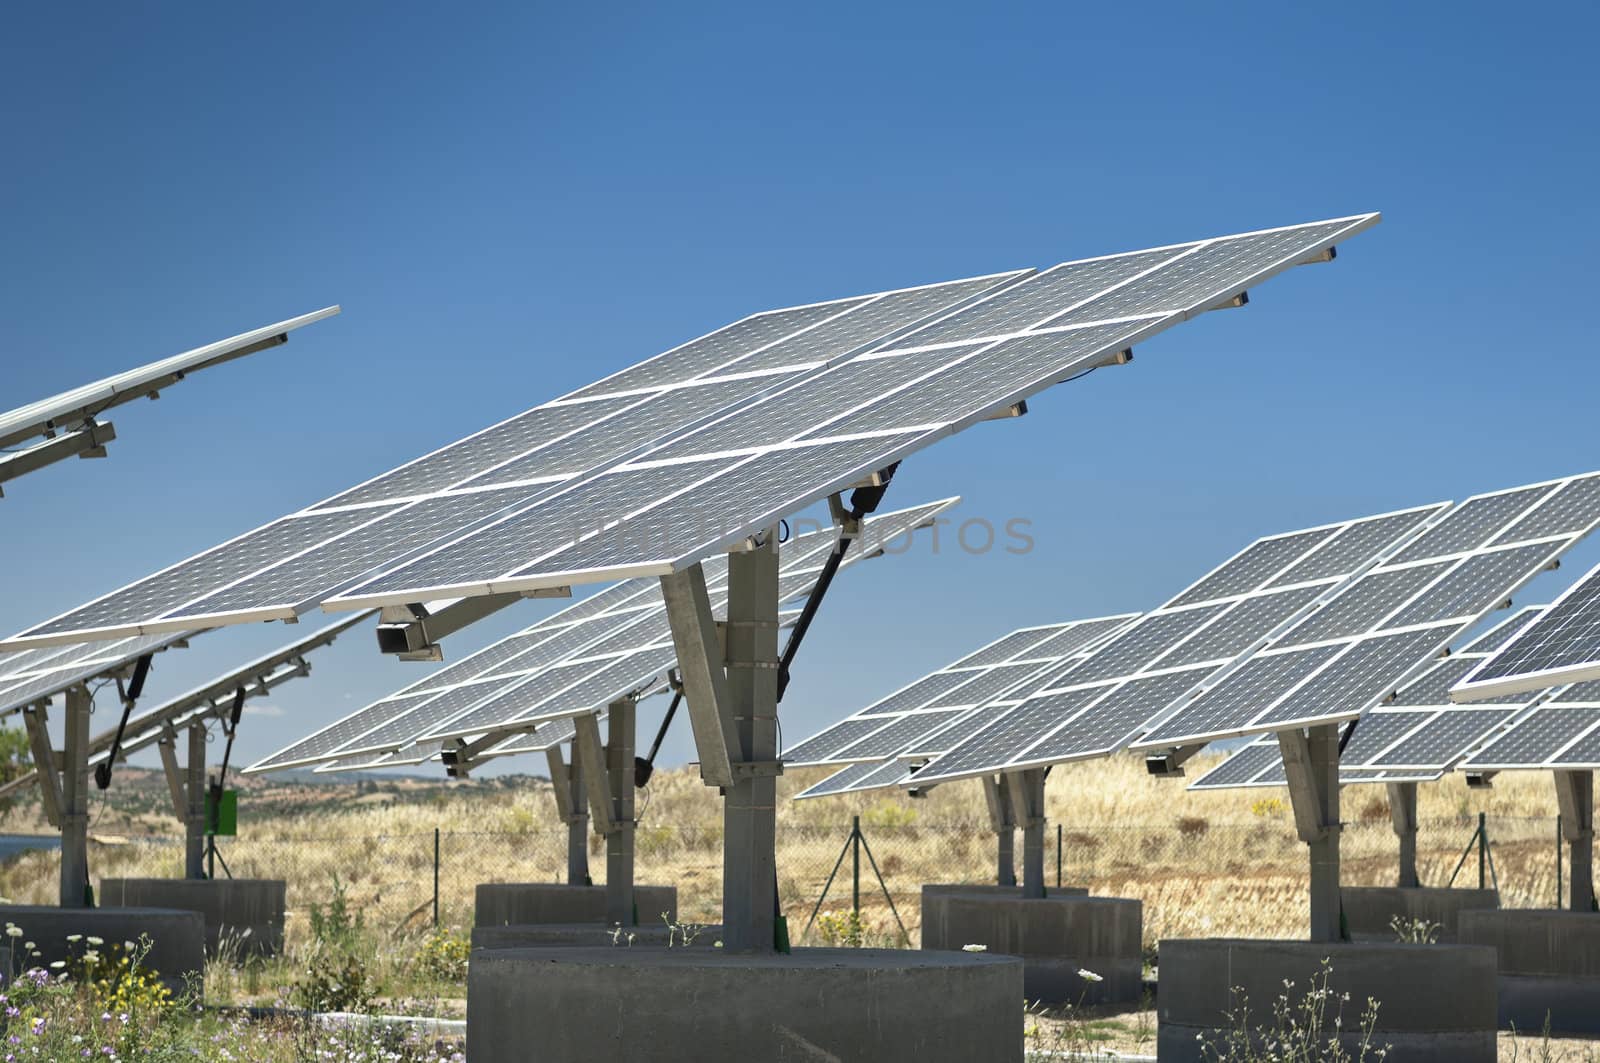 Solar power plant by mrfotos